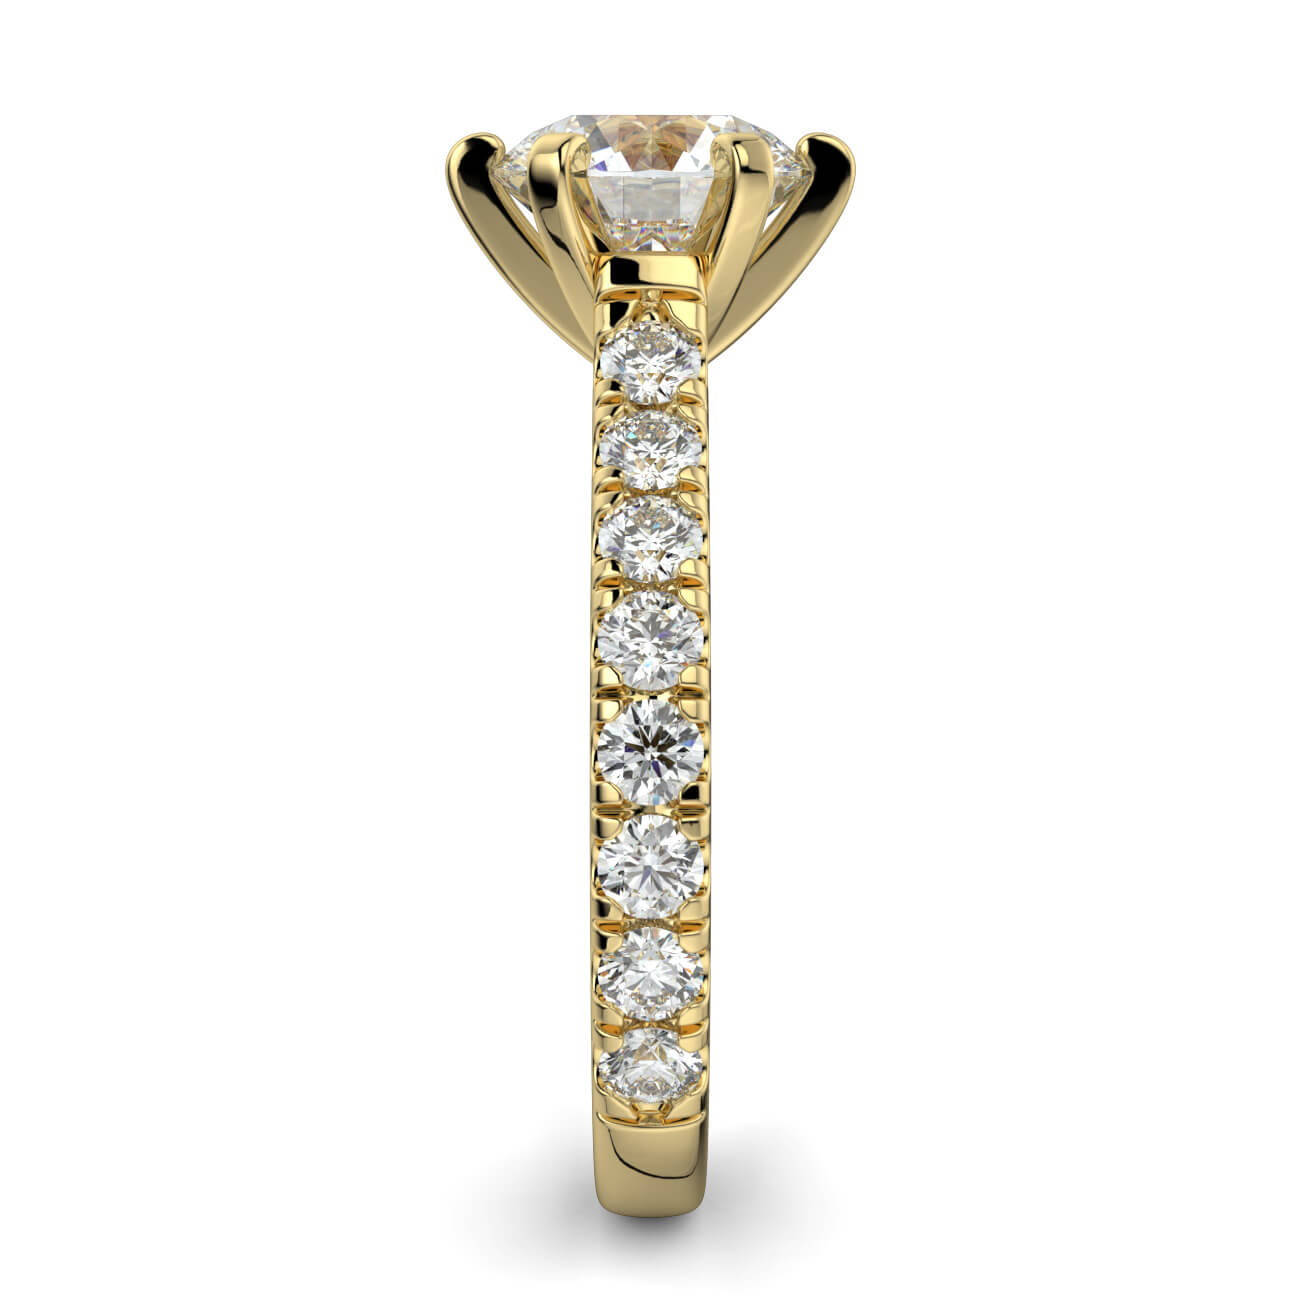 Round Brilliant Cut Diamond Engagement Ring In Yellow Gold – Australian Diamond Network